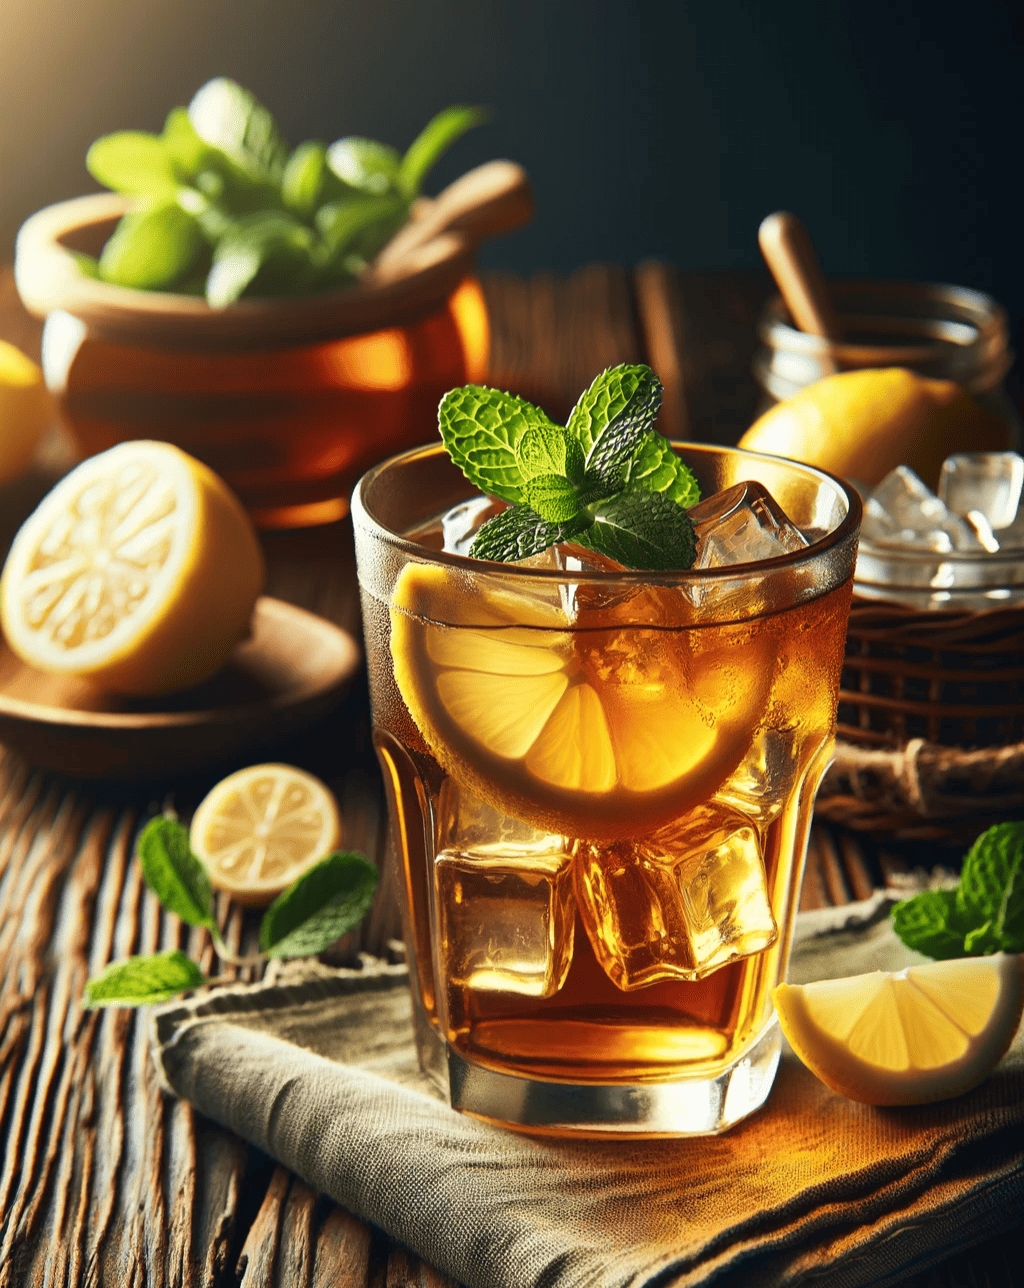 Iced Tea Lemonade (Arnold Palmer)